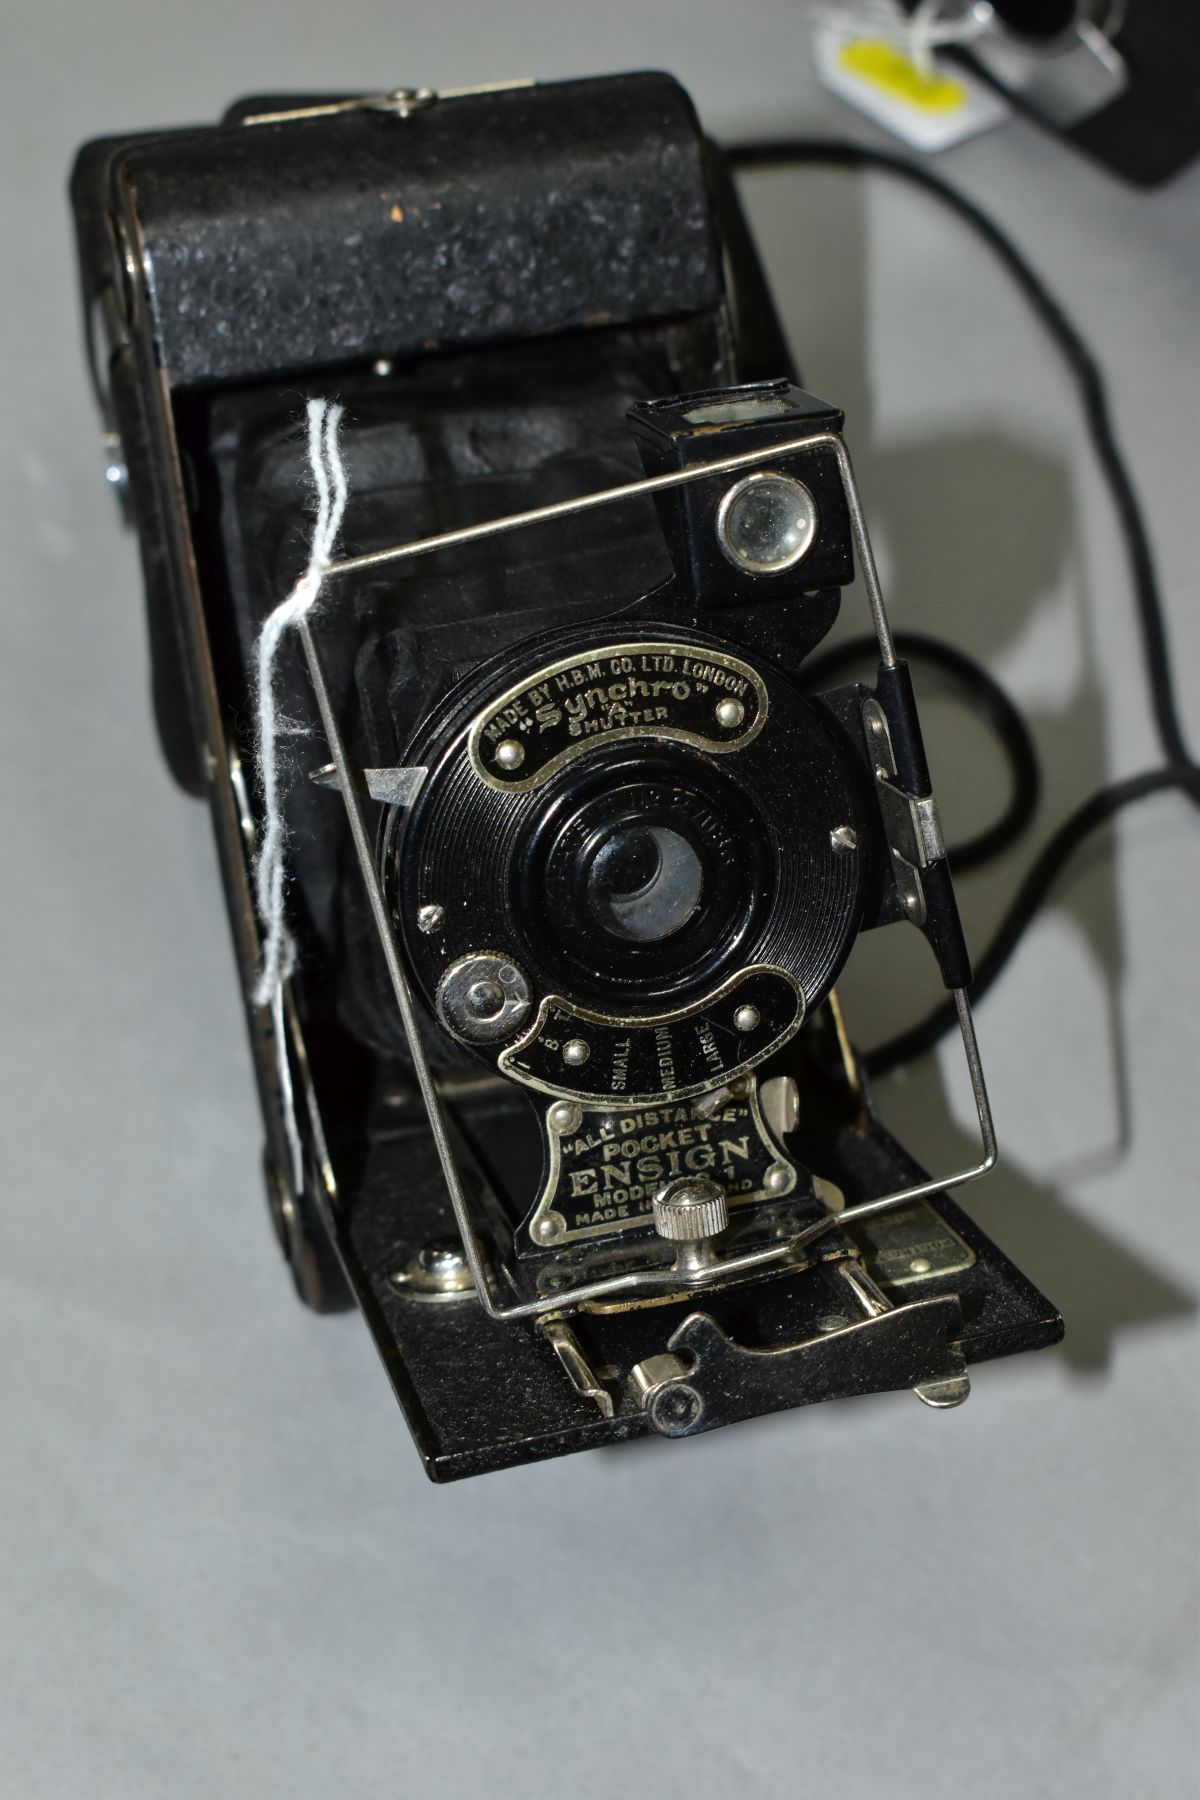 AN ENSIGN INSTANT POCKET FOLDING CAMERA, a Ross Ensign Ful-Vue Super and a Fujica 8EE Cine camera ( - Image 5 of 8